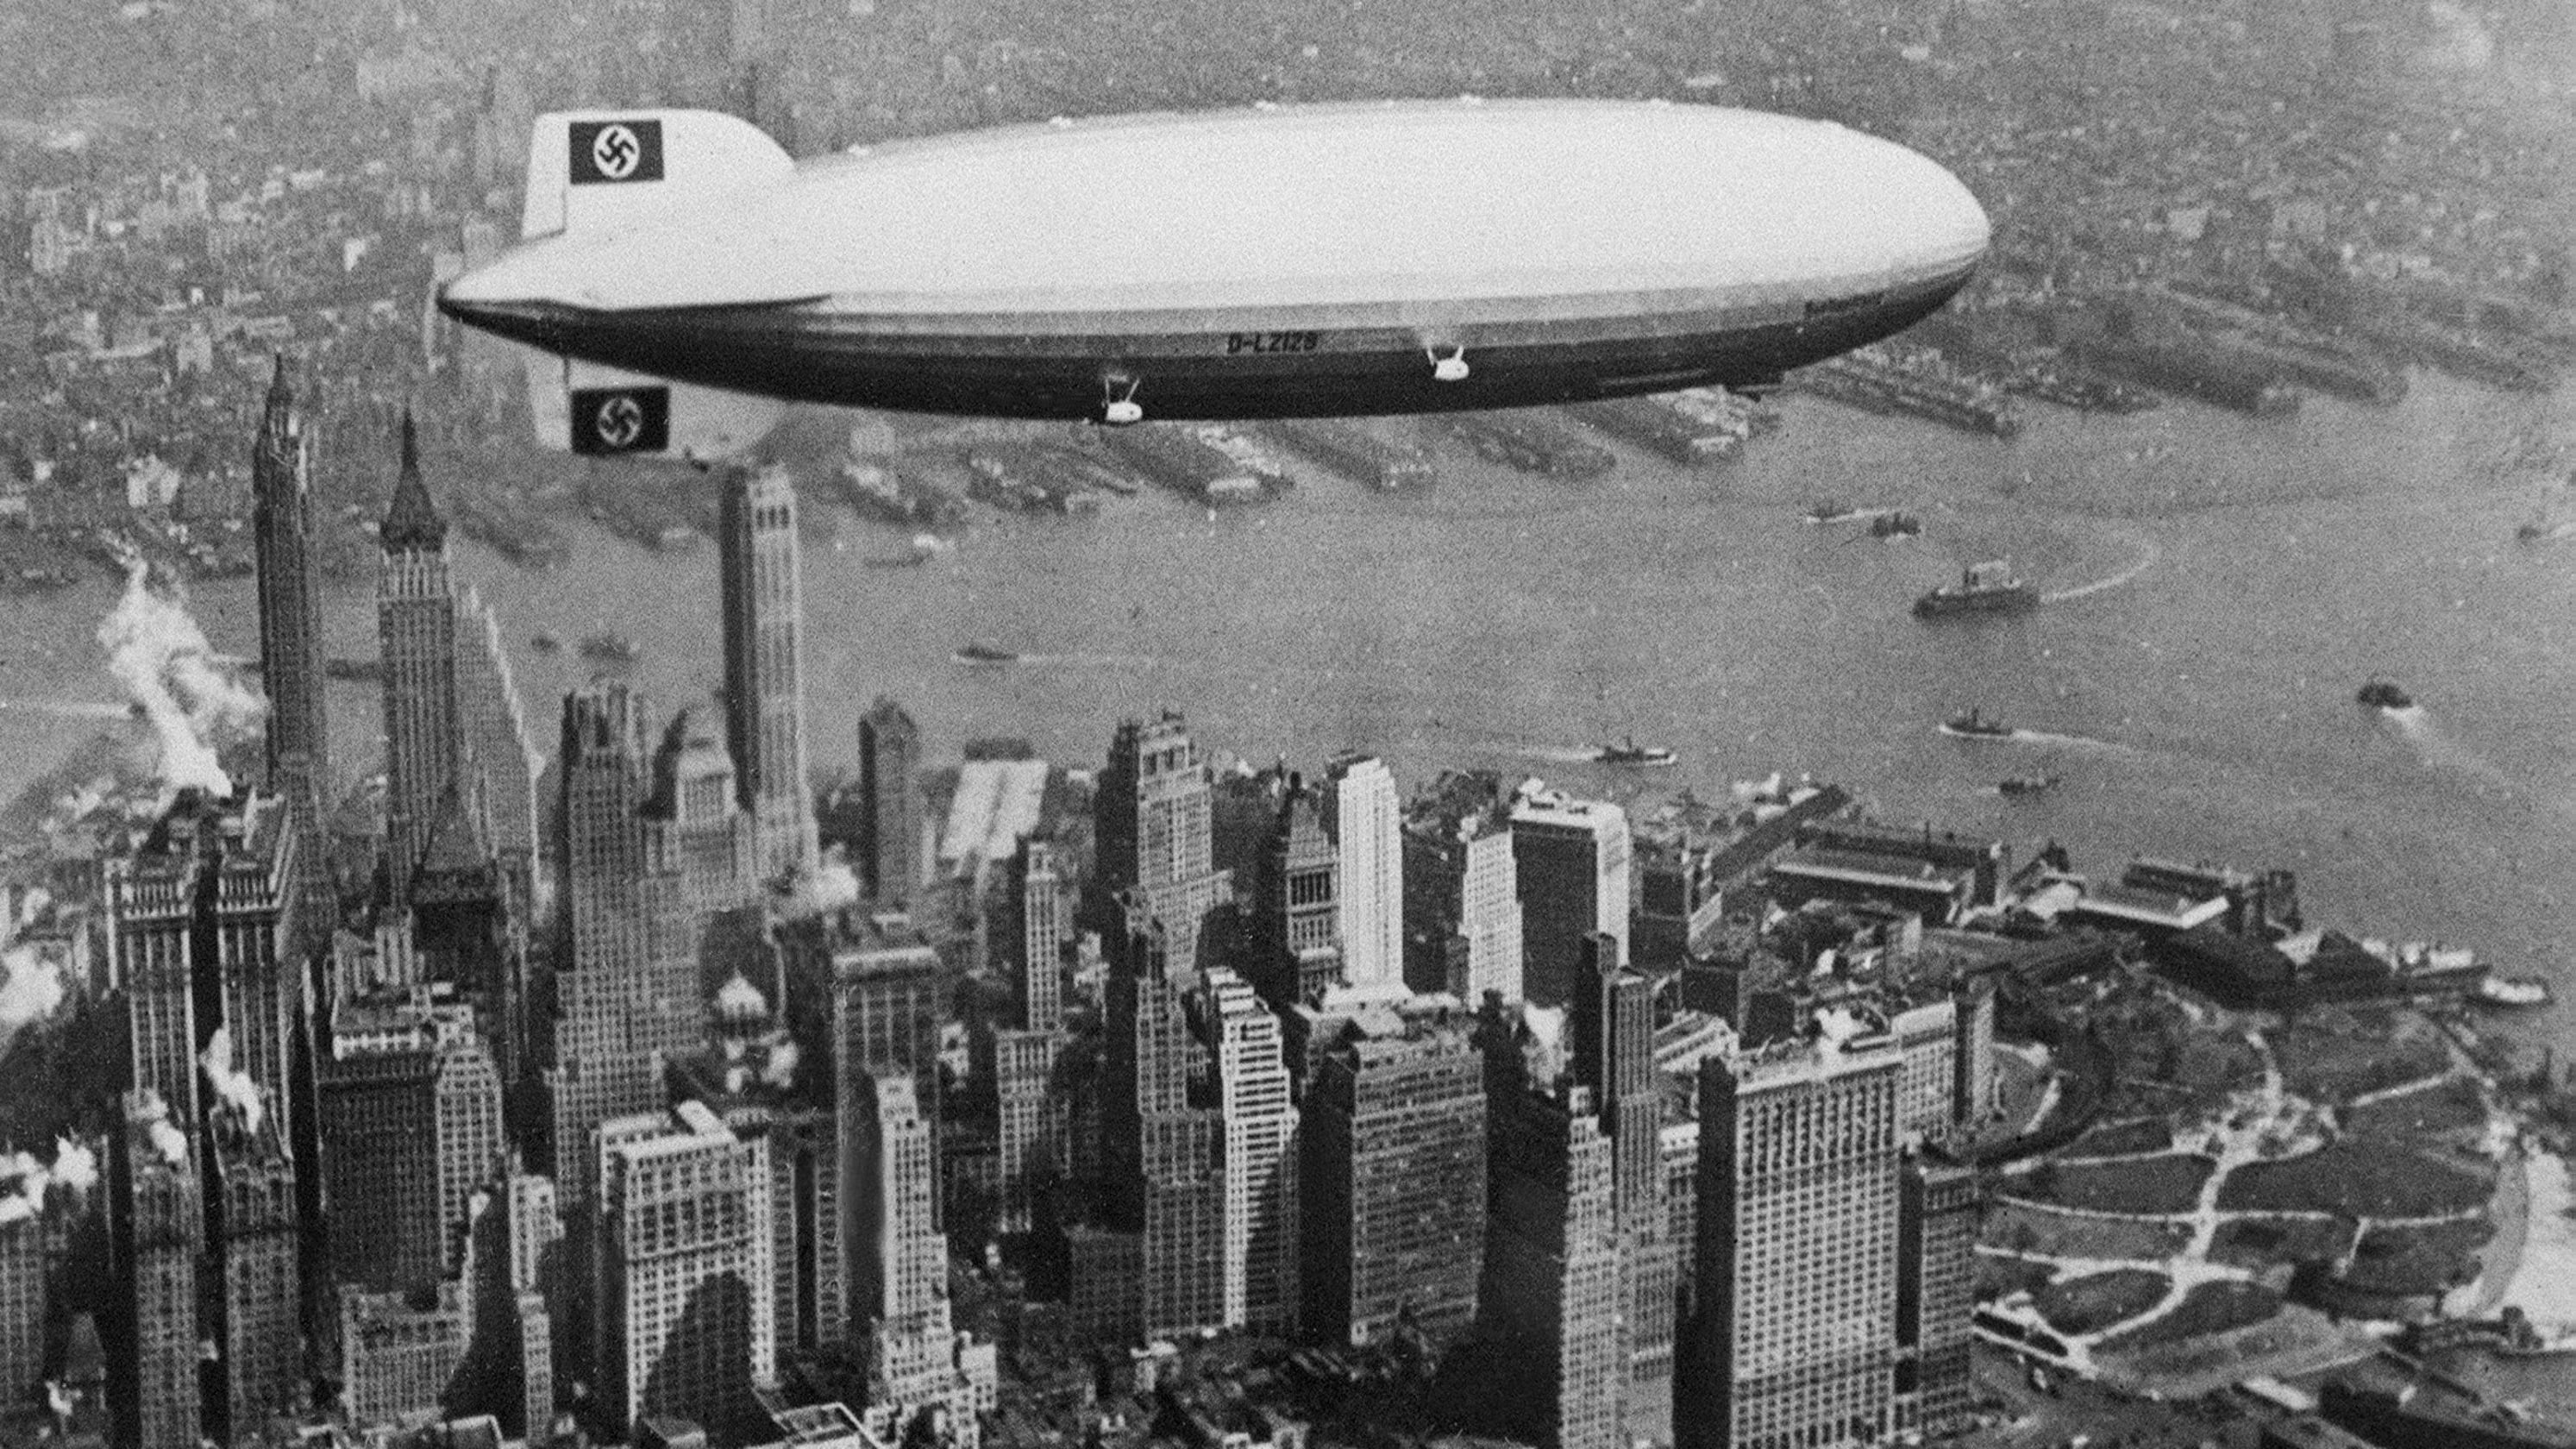 Hindenburg Disaster: Probable Cause (2001)